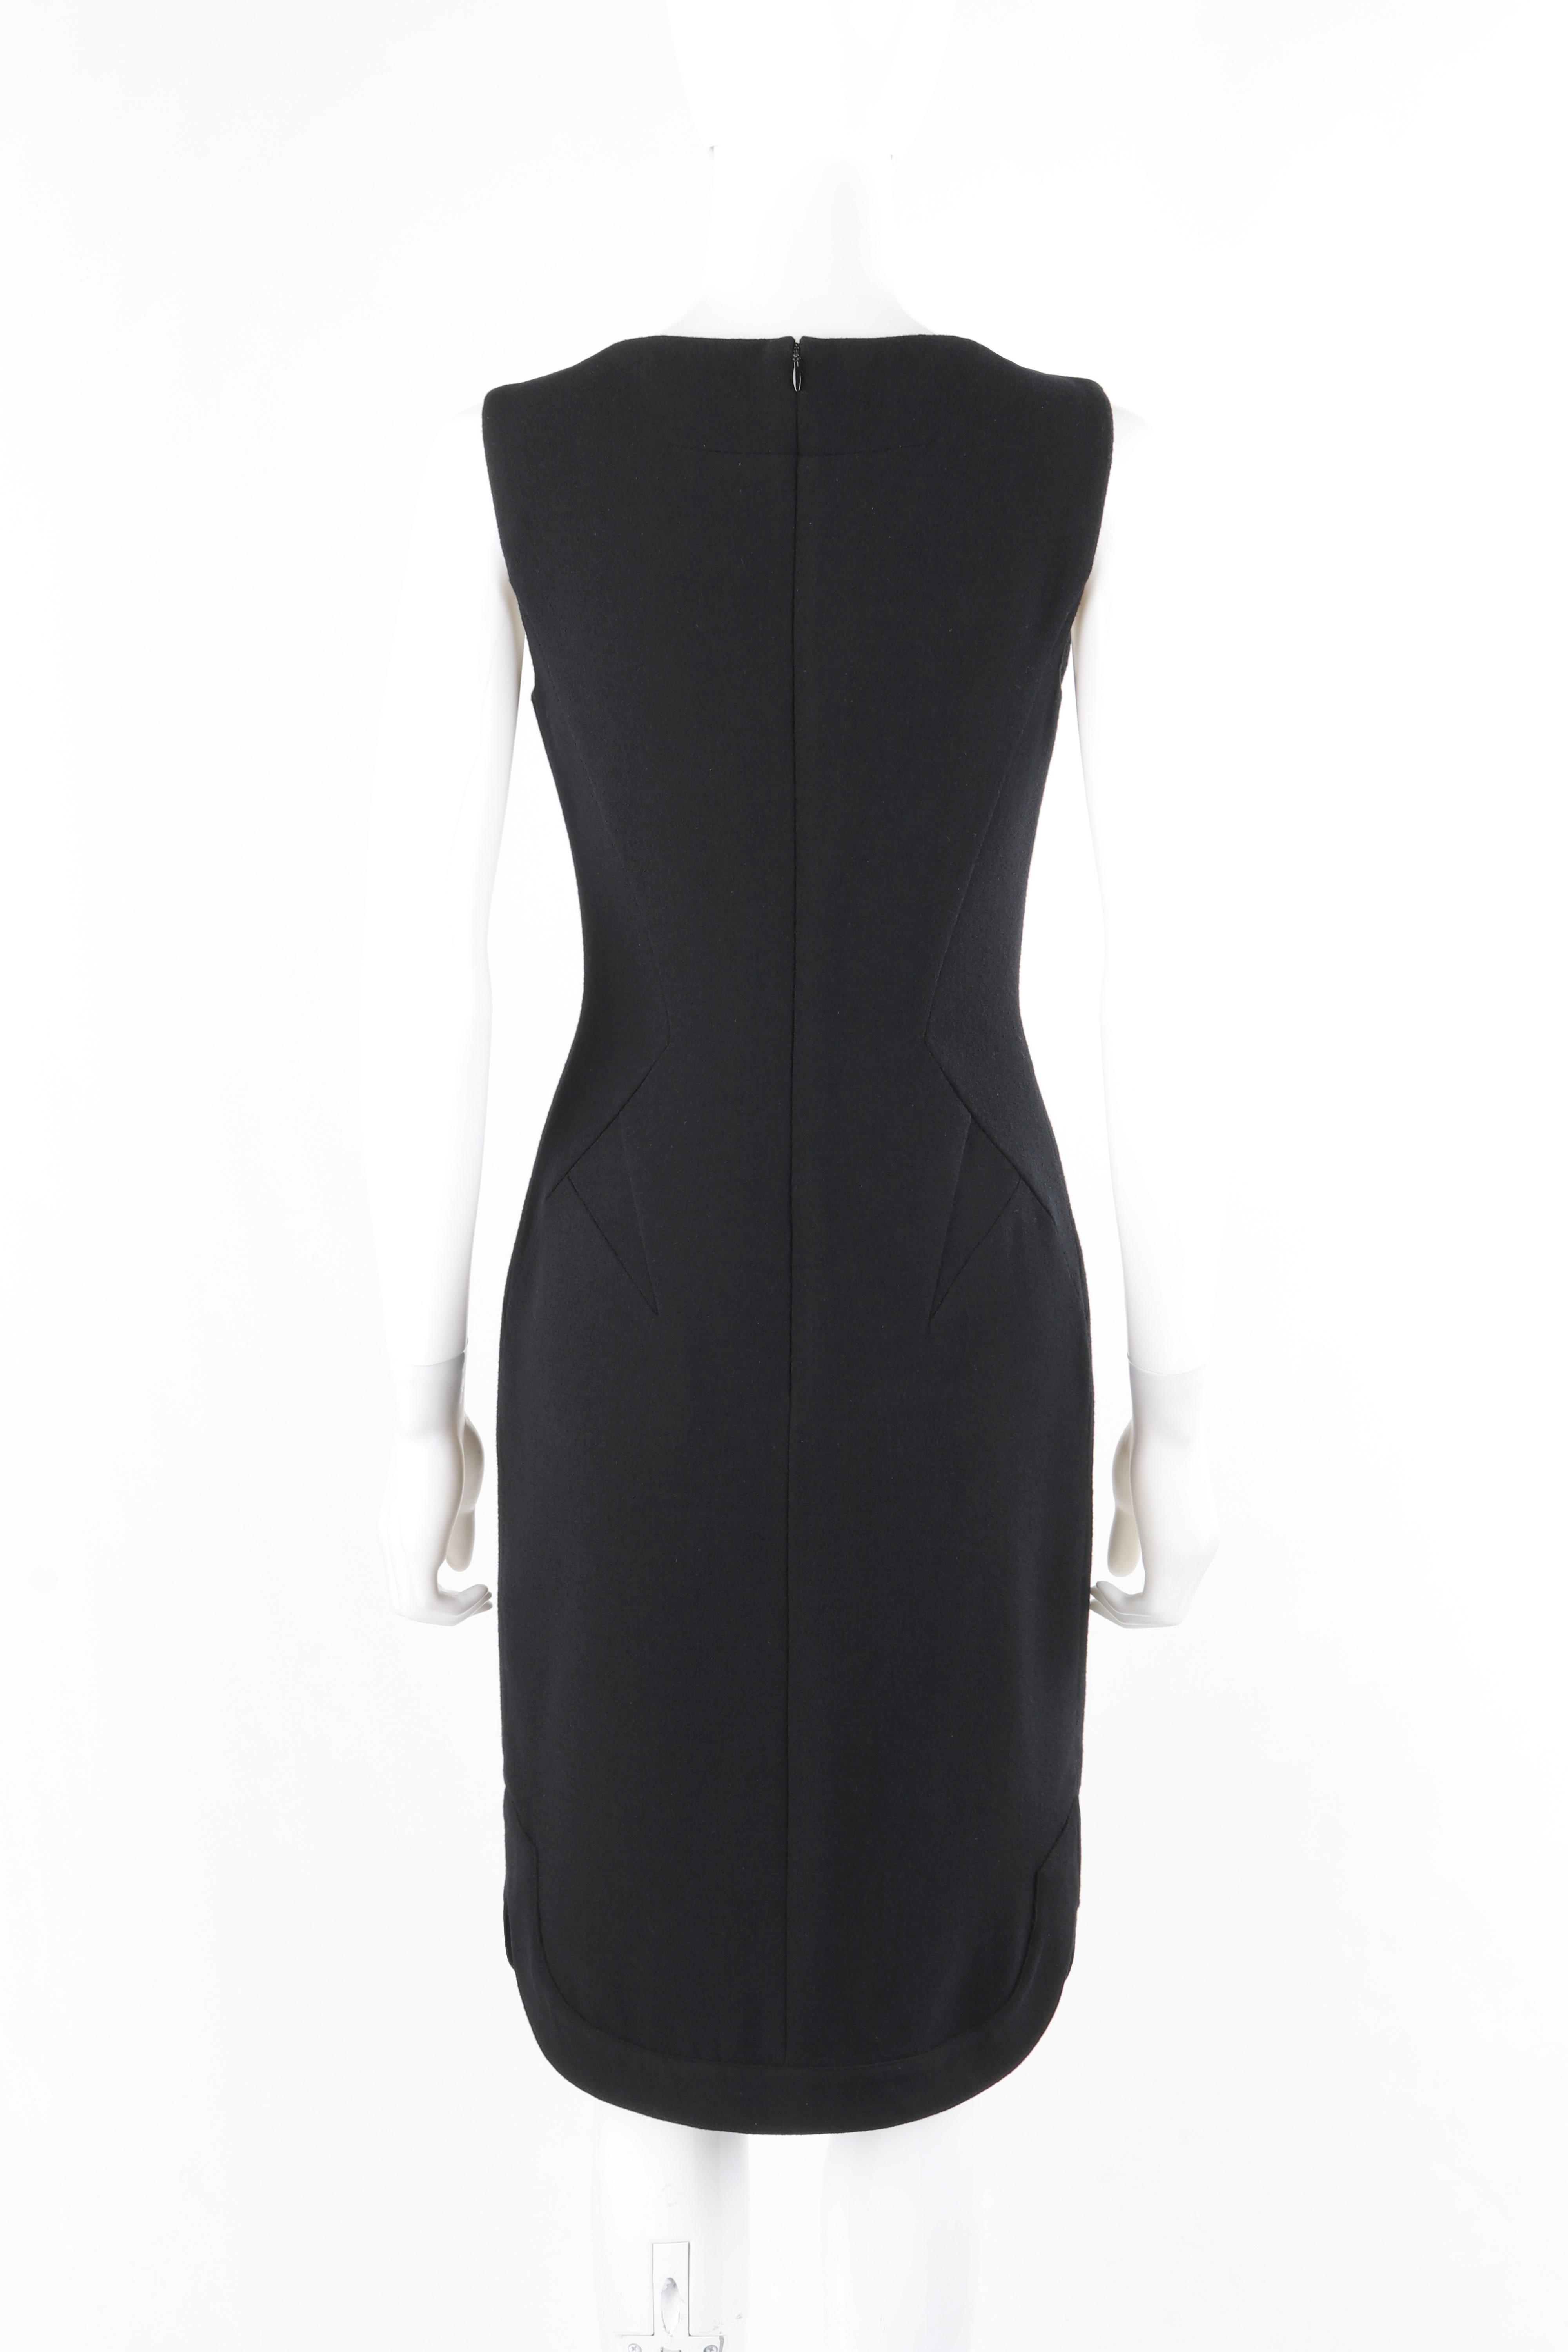 Women's GIVENCHY c.2010's Black Tailored Geometric Panel Detail Sleeveless Sheath Dress